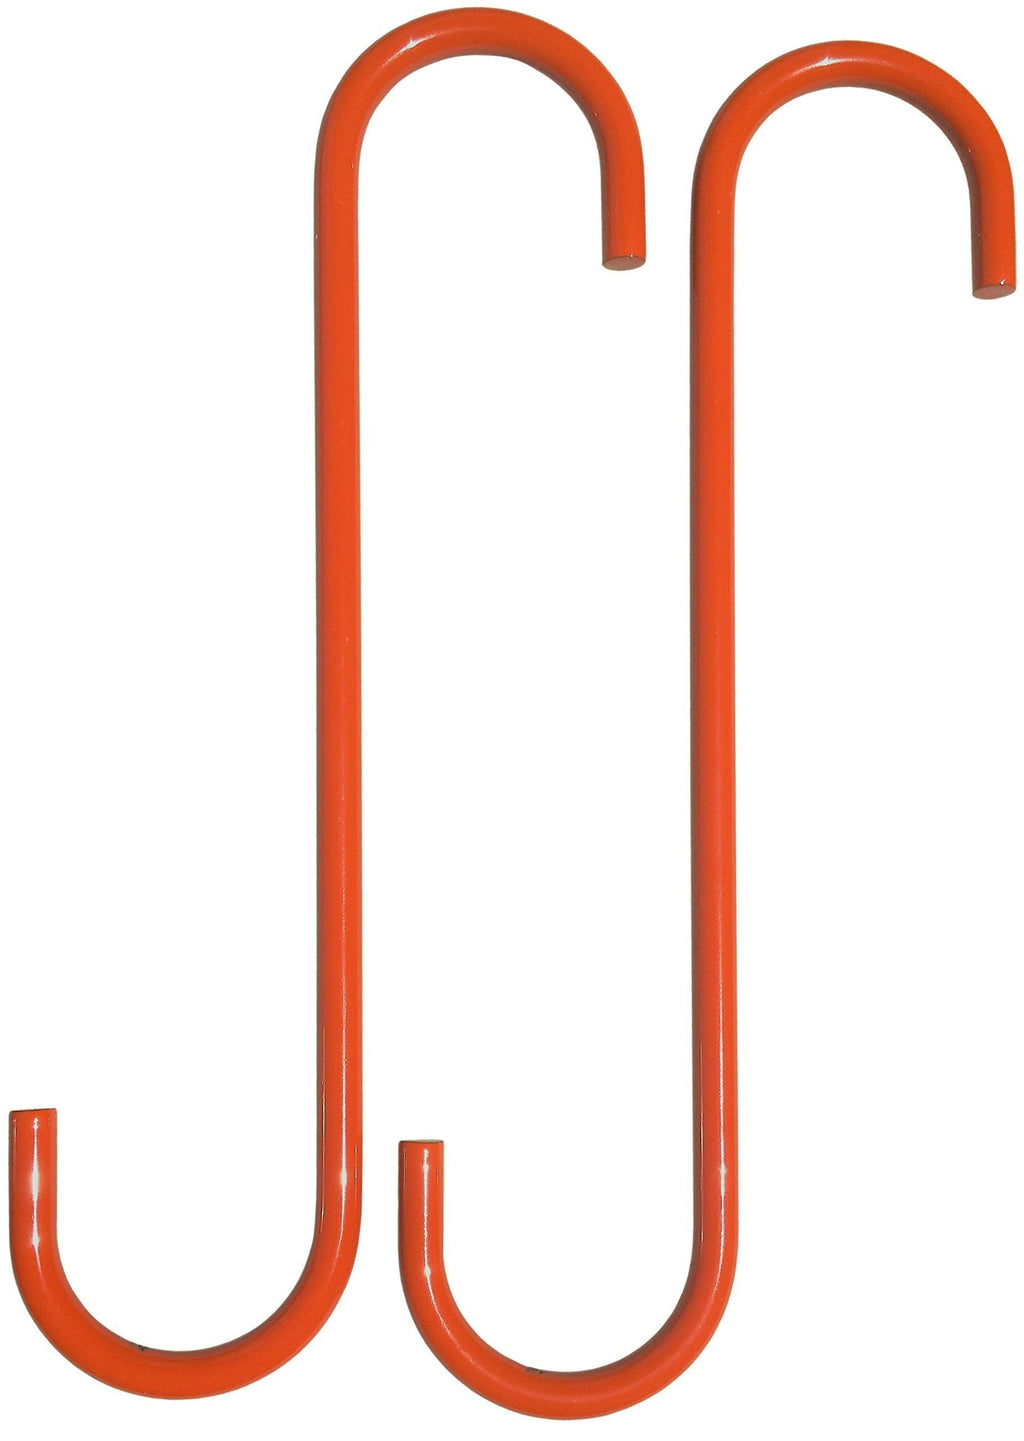  [AUSTRALIA] - JQuad -Safety Orange- Powder Coated Brake Caliper Hanger Hook (2 Piece Set) -Made in The USA-